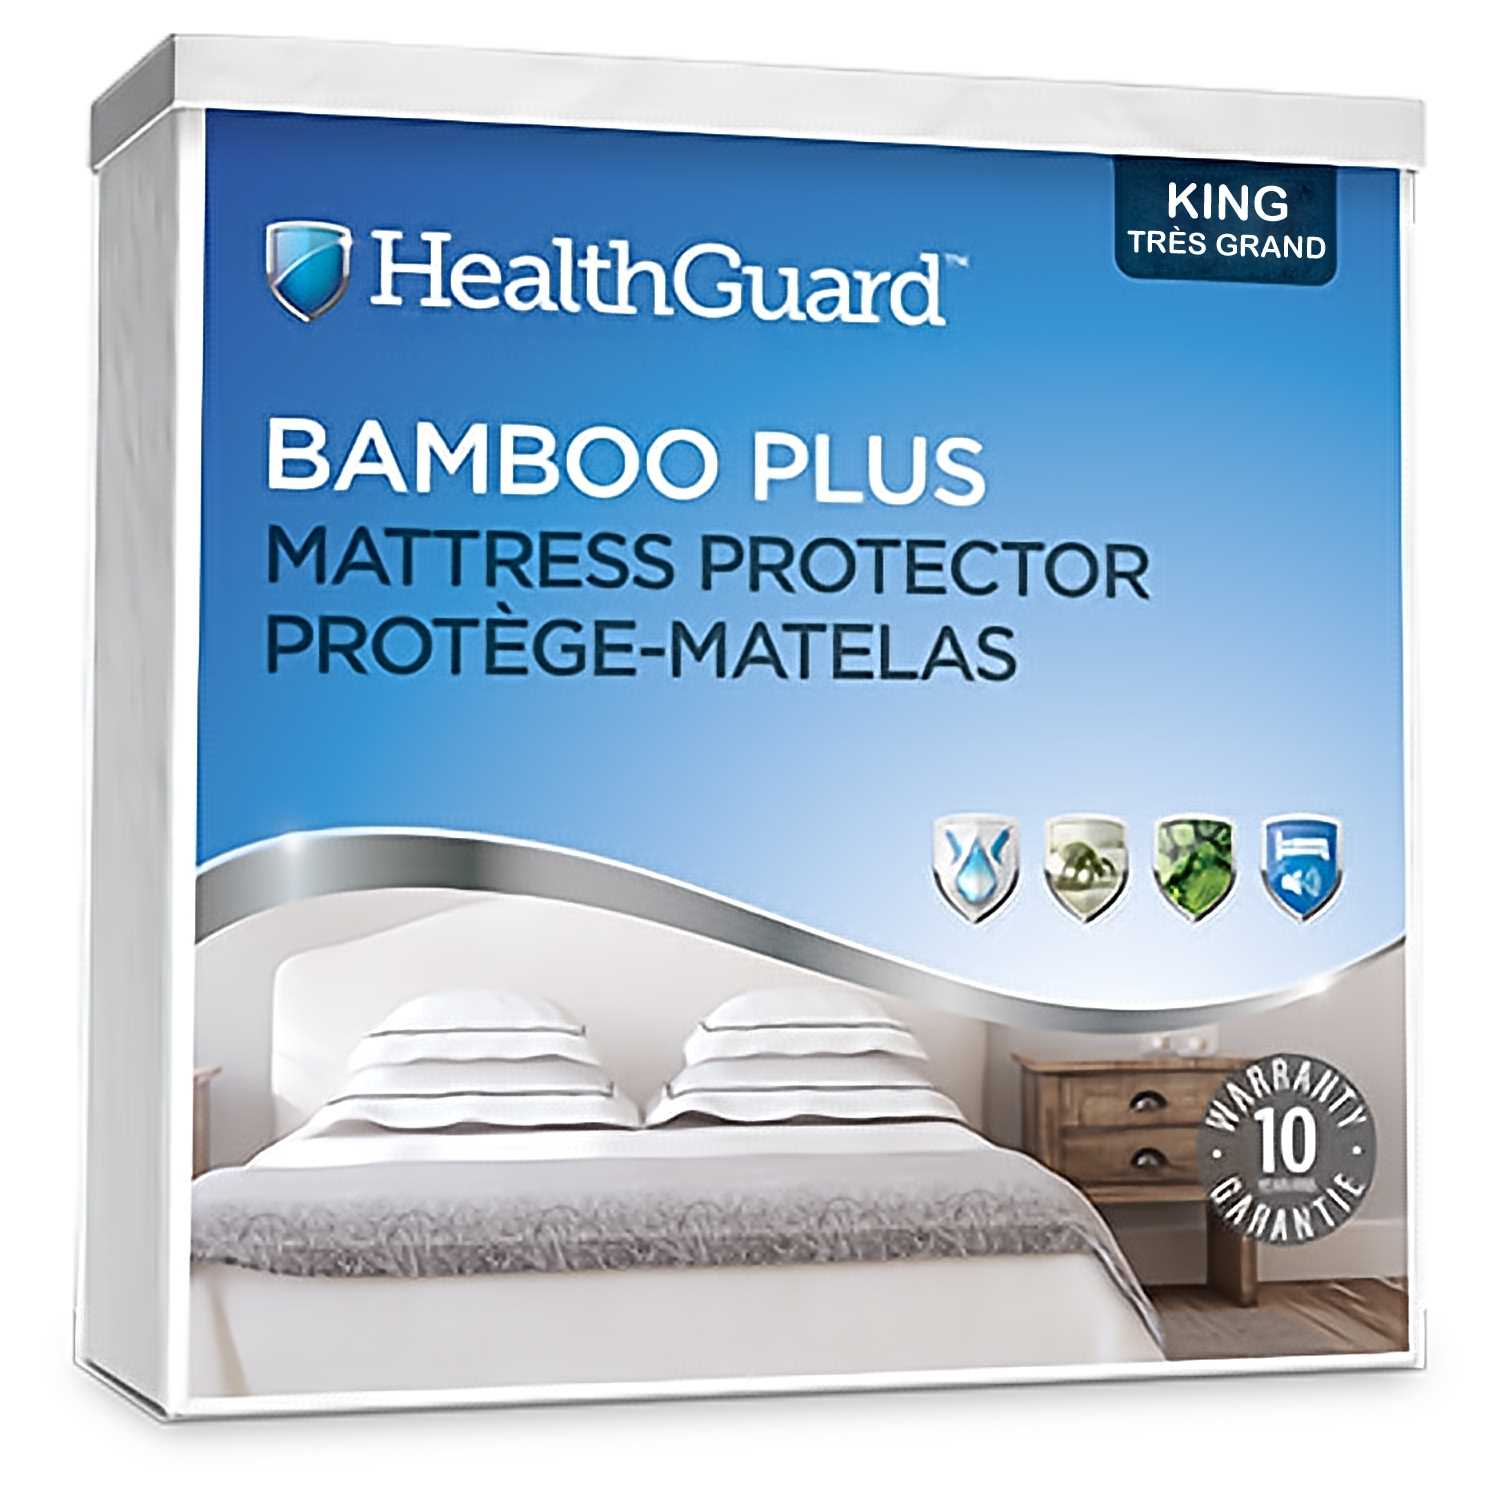 Health Guard Bamboo Plus Mattress Protector - King